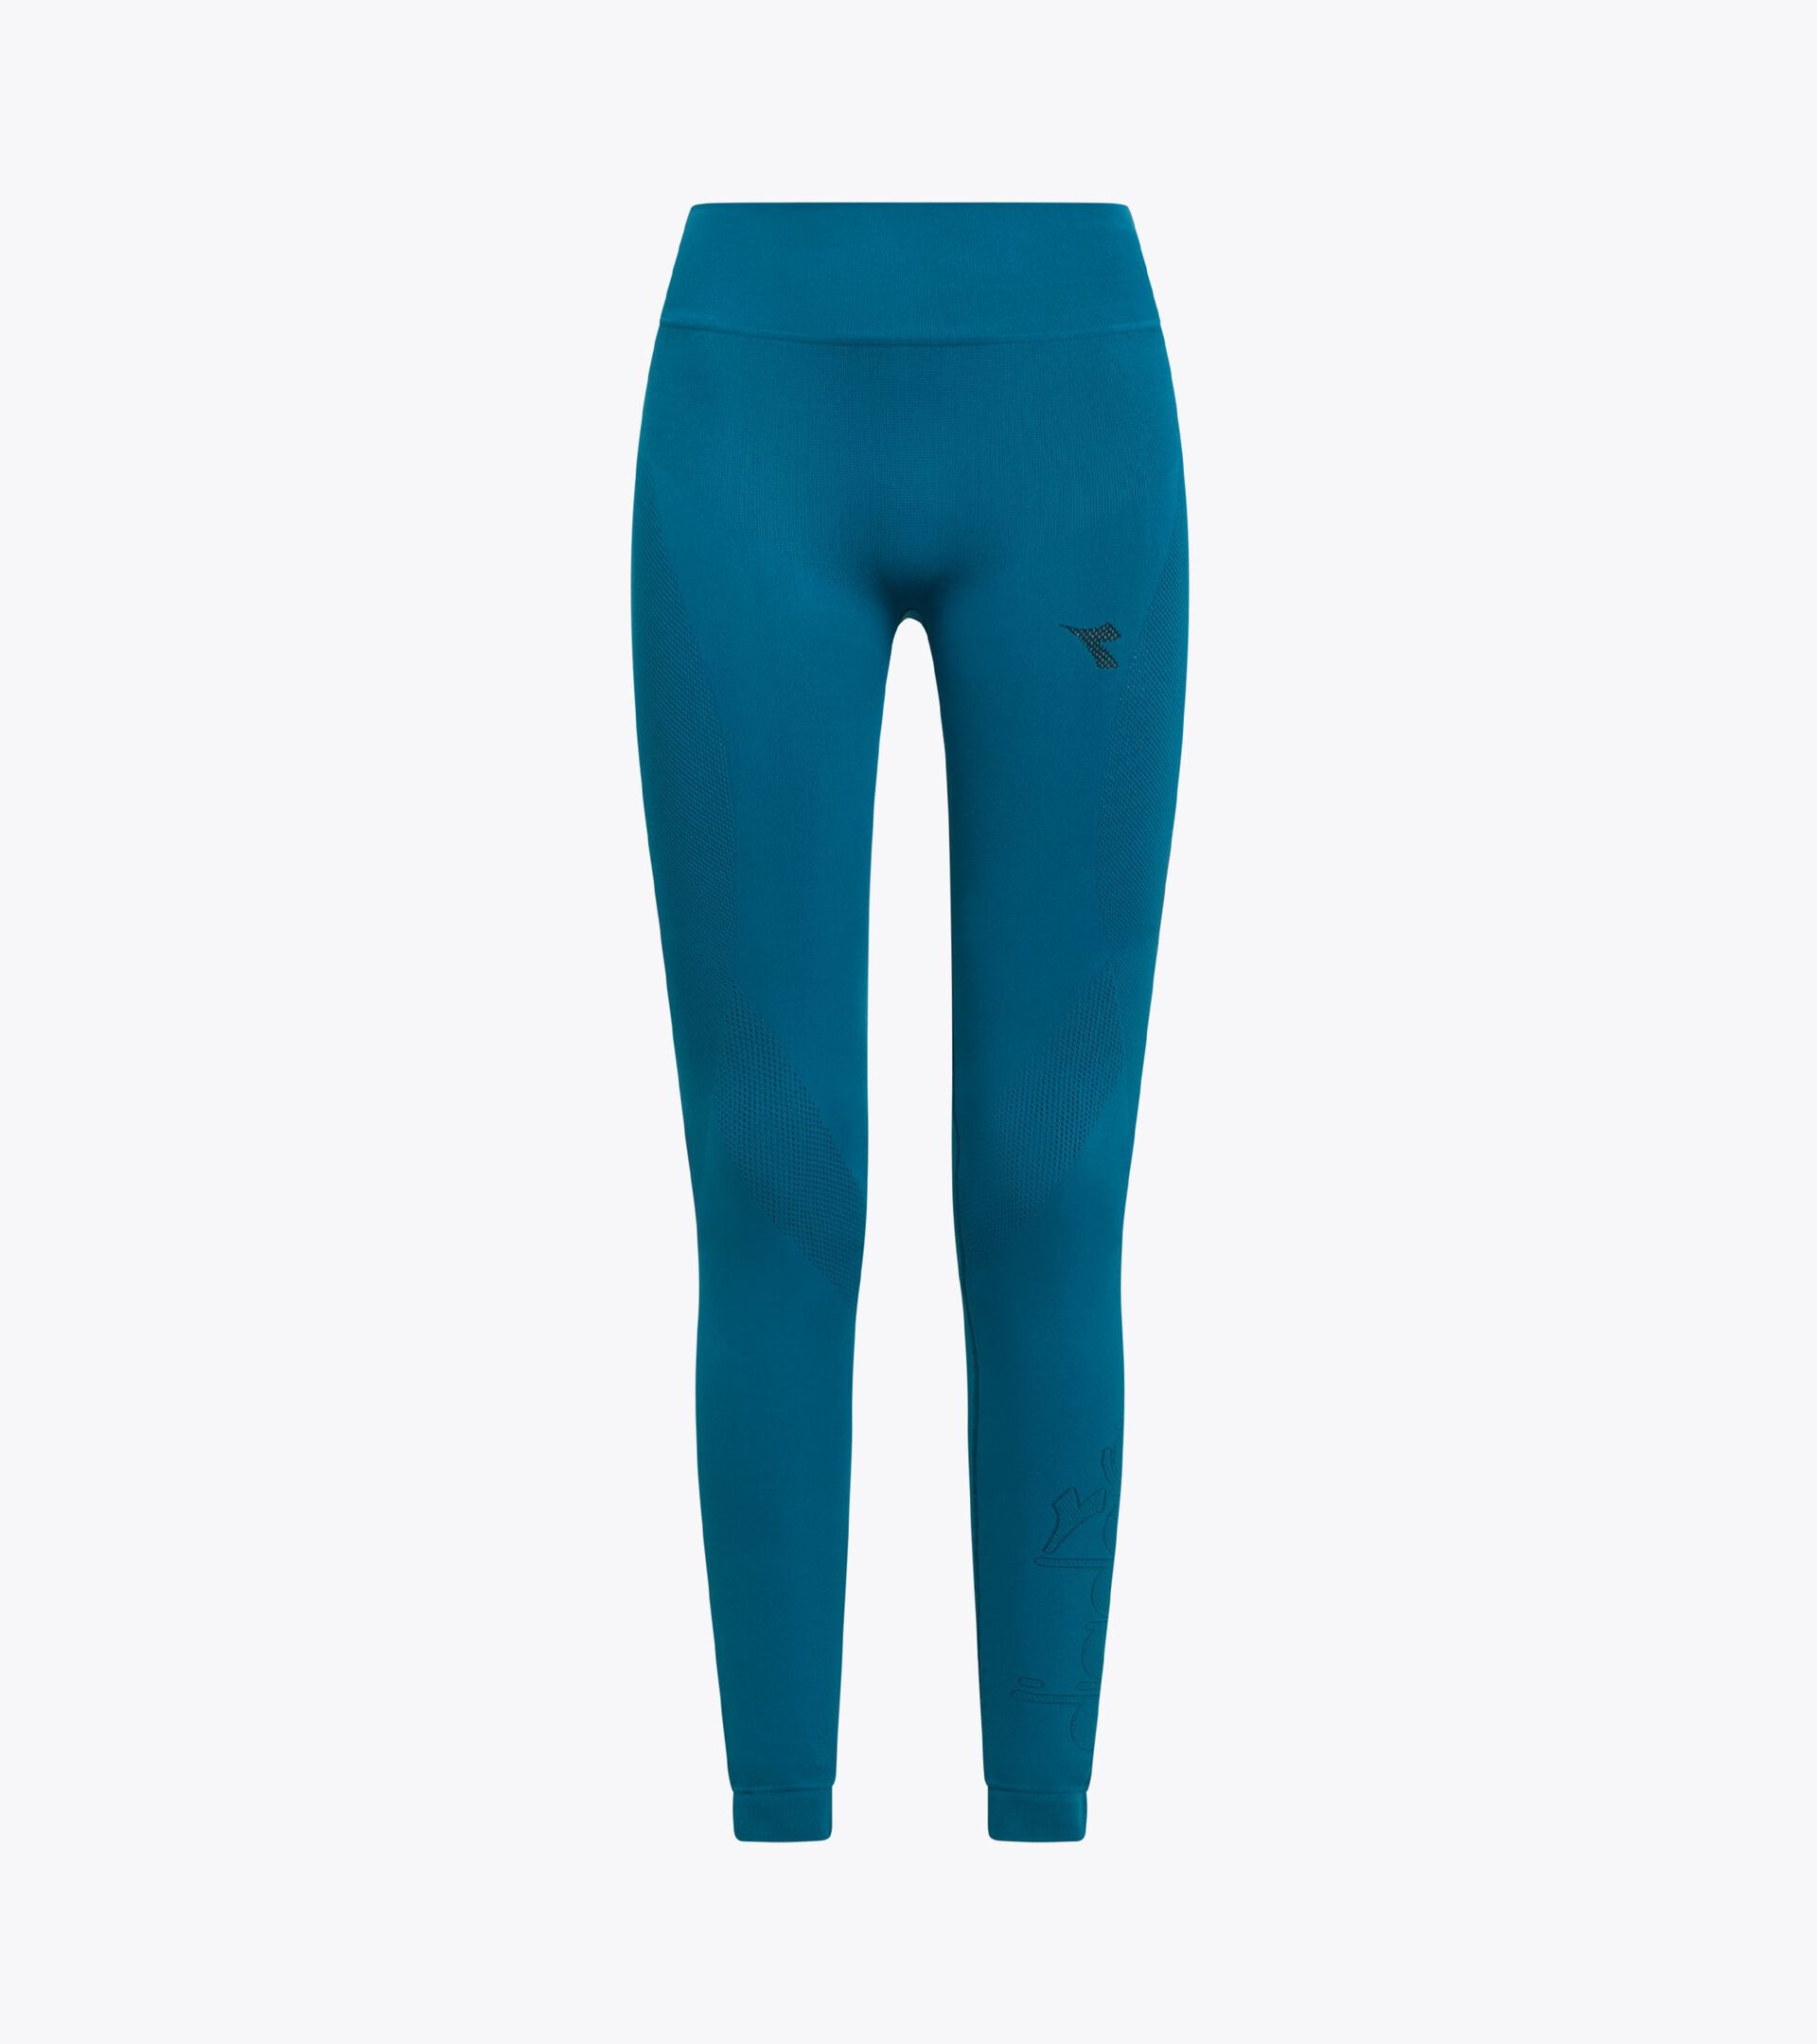 Running leggings - Women L. TIGHTS SKIN FRIENDLY COLONIAL BLUE - Diadora